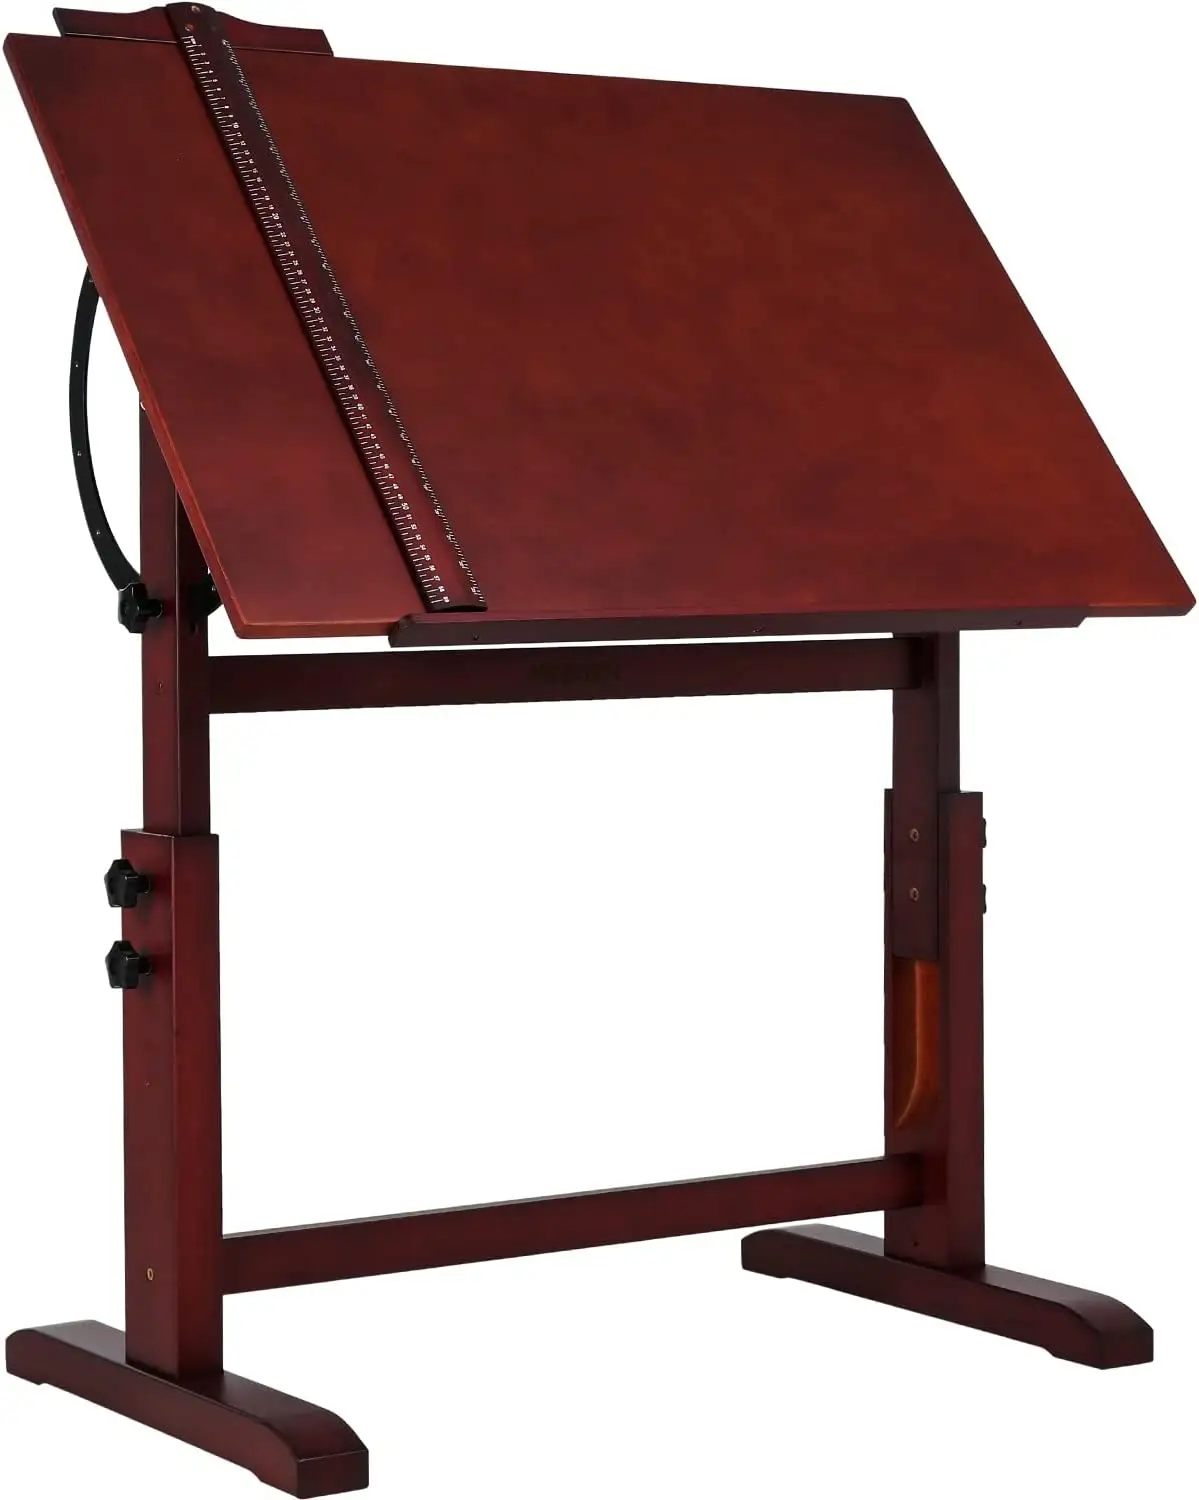 MEEDEN ชุดโต๊ะและสตูลไม้สไตล์วินเทจ,เก้าอี้ล้อเลื่อนและโต๊ะงานฝีมือสำหรับศิลปินปรับความสูงได้